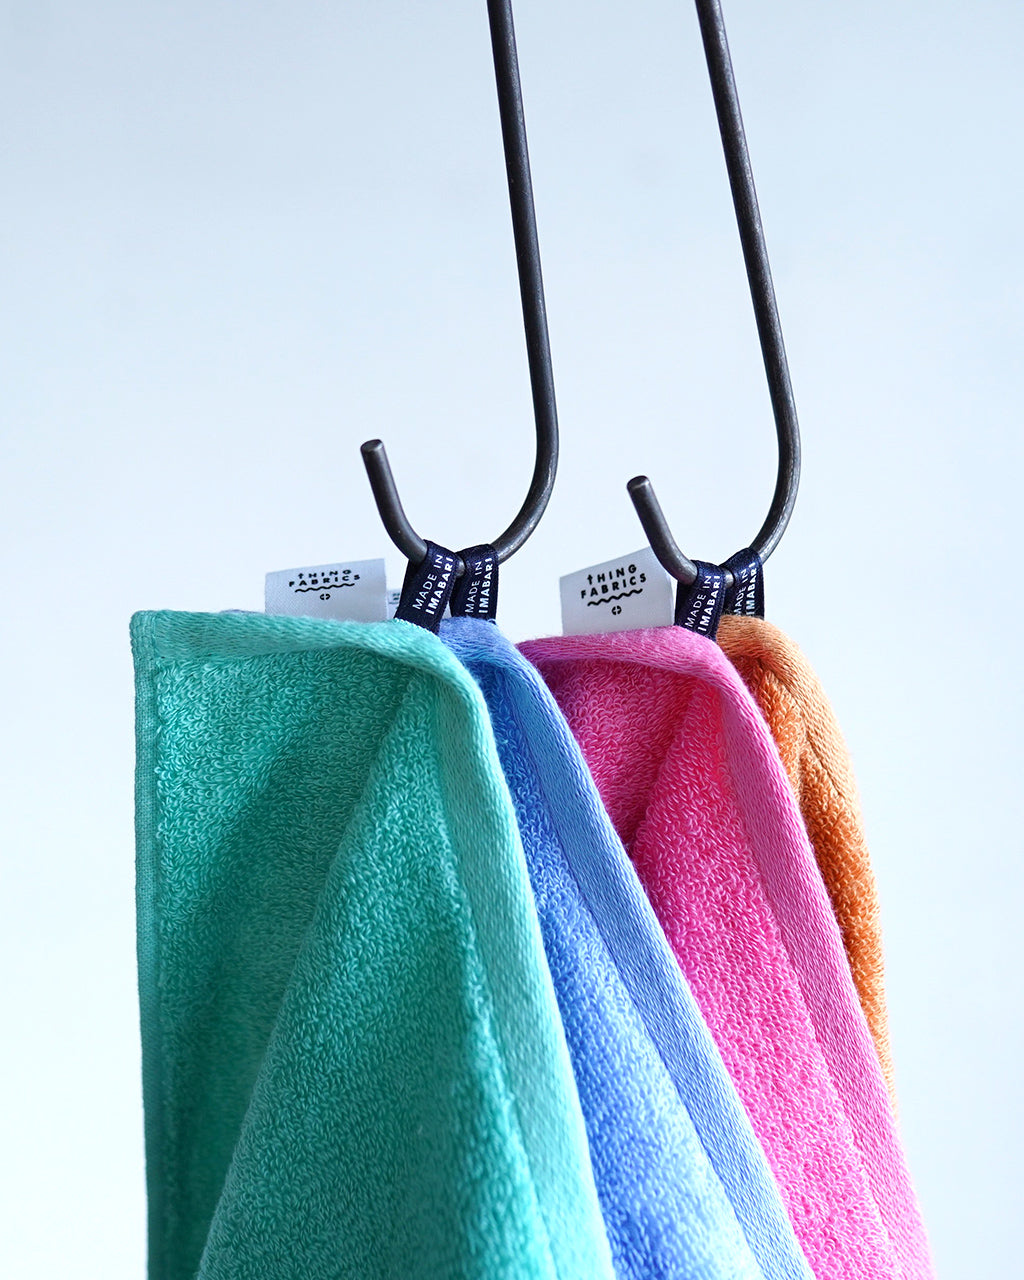 THING FABRICS シングファブリックス フェイスタオル TIP TOP 365 face towel 日用雑貨 ギフト プレゼント TFOT-1003 【メール便可】